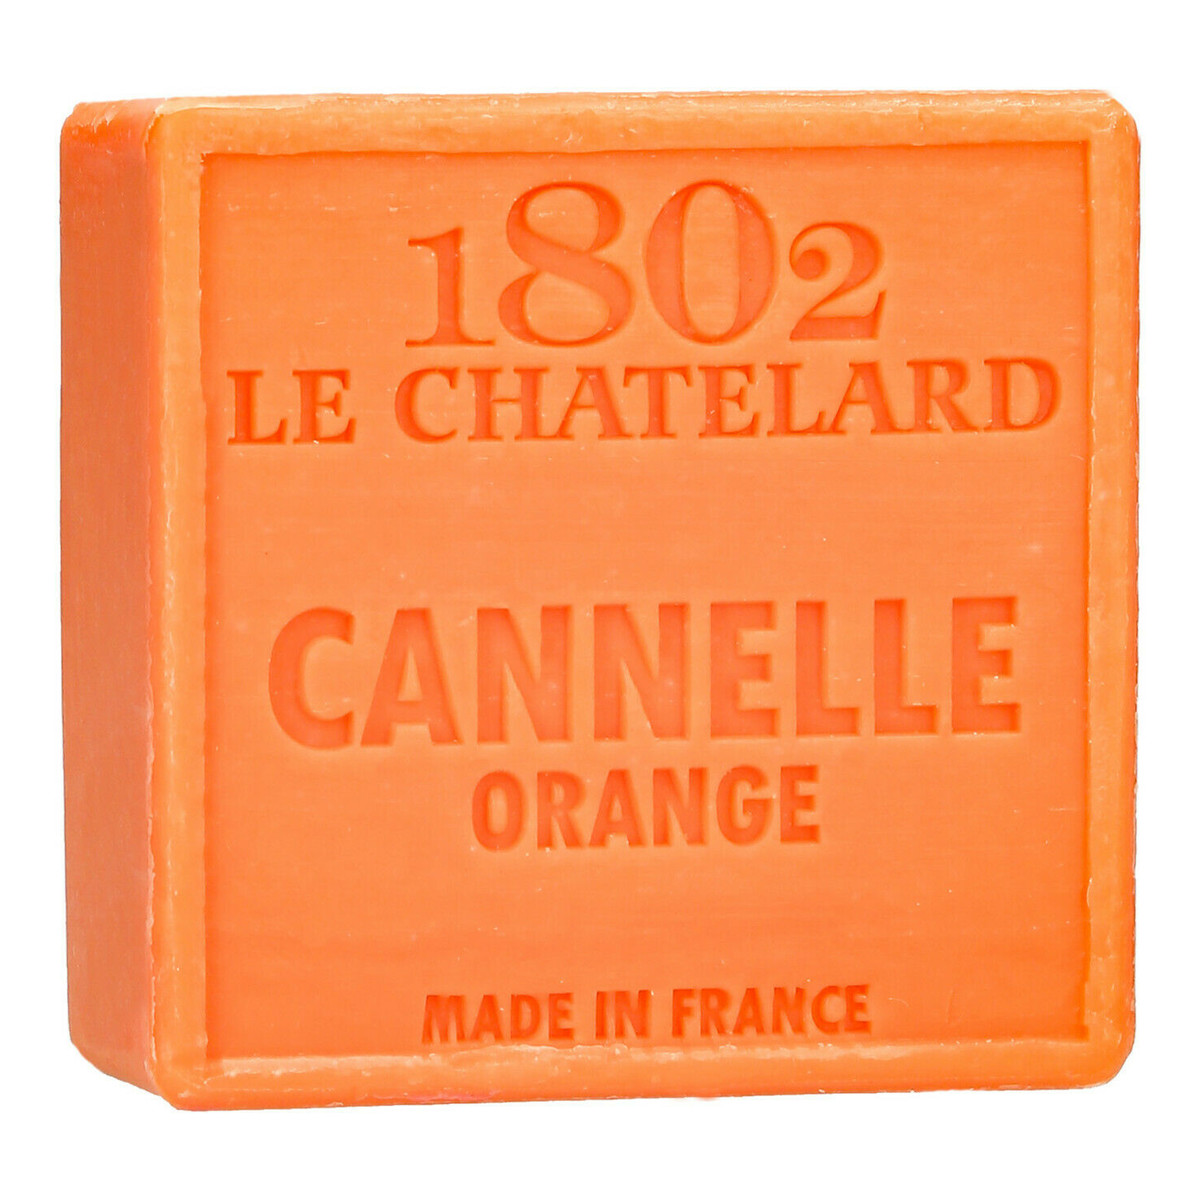 Le Chatelard 1802 Mydło Marsylskie Orange 100g